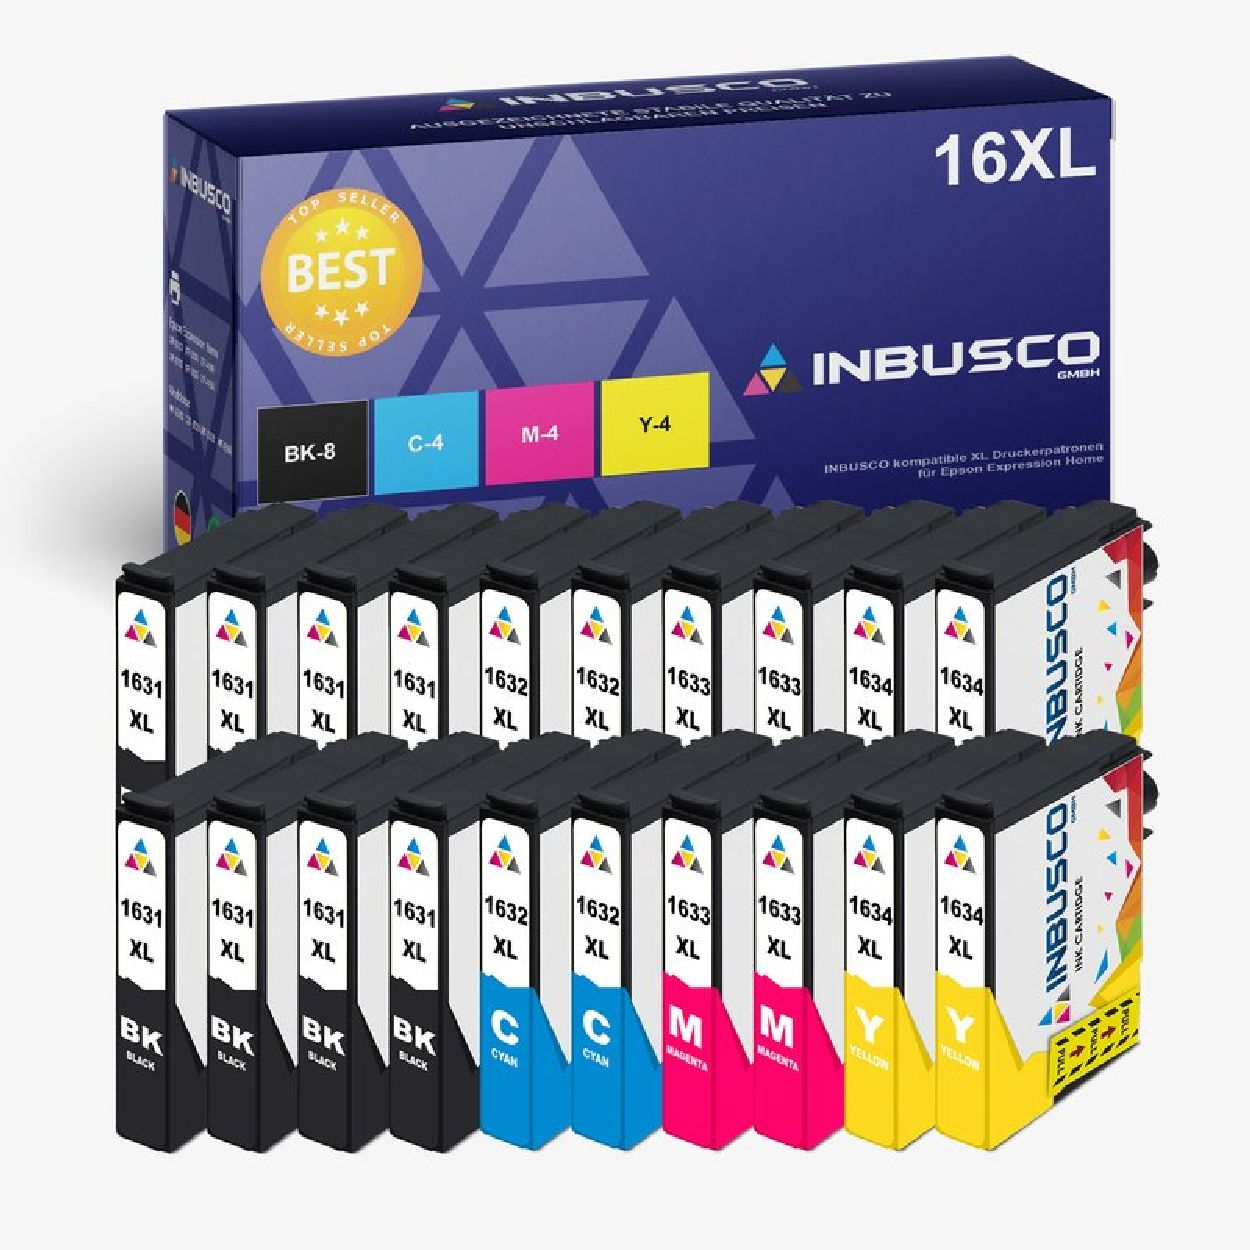 INBUSCO / KUBIS SET 16xl Mehrfarbig Tintenpatrone (20x16XL)